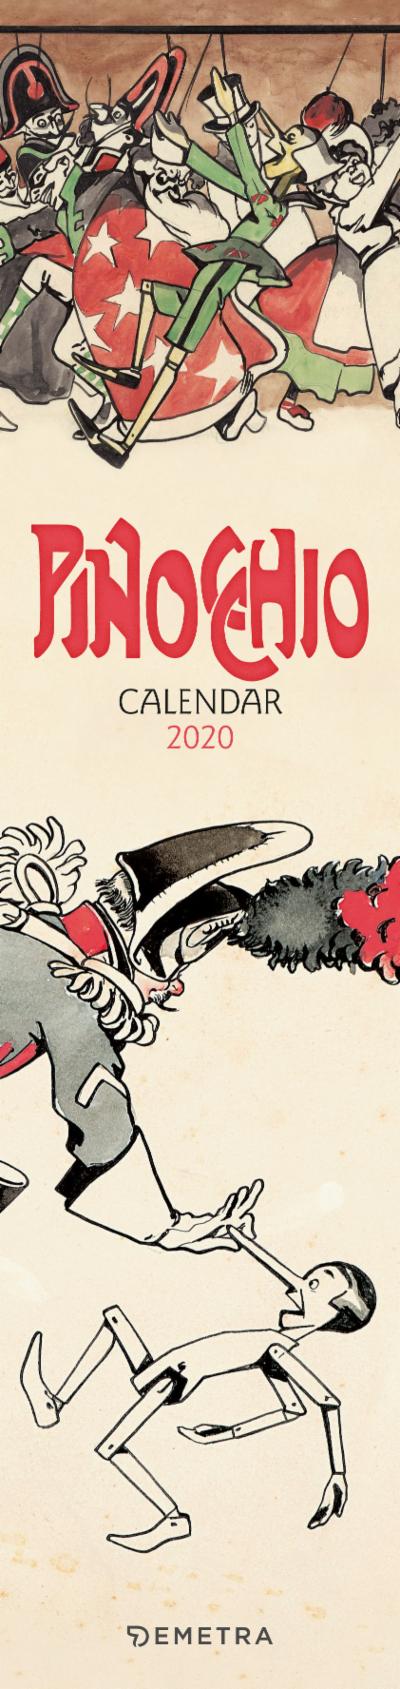 Pinocchio Calendar 2020